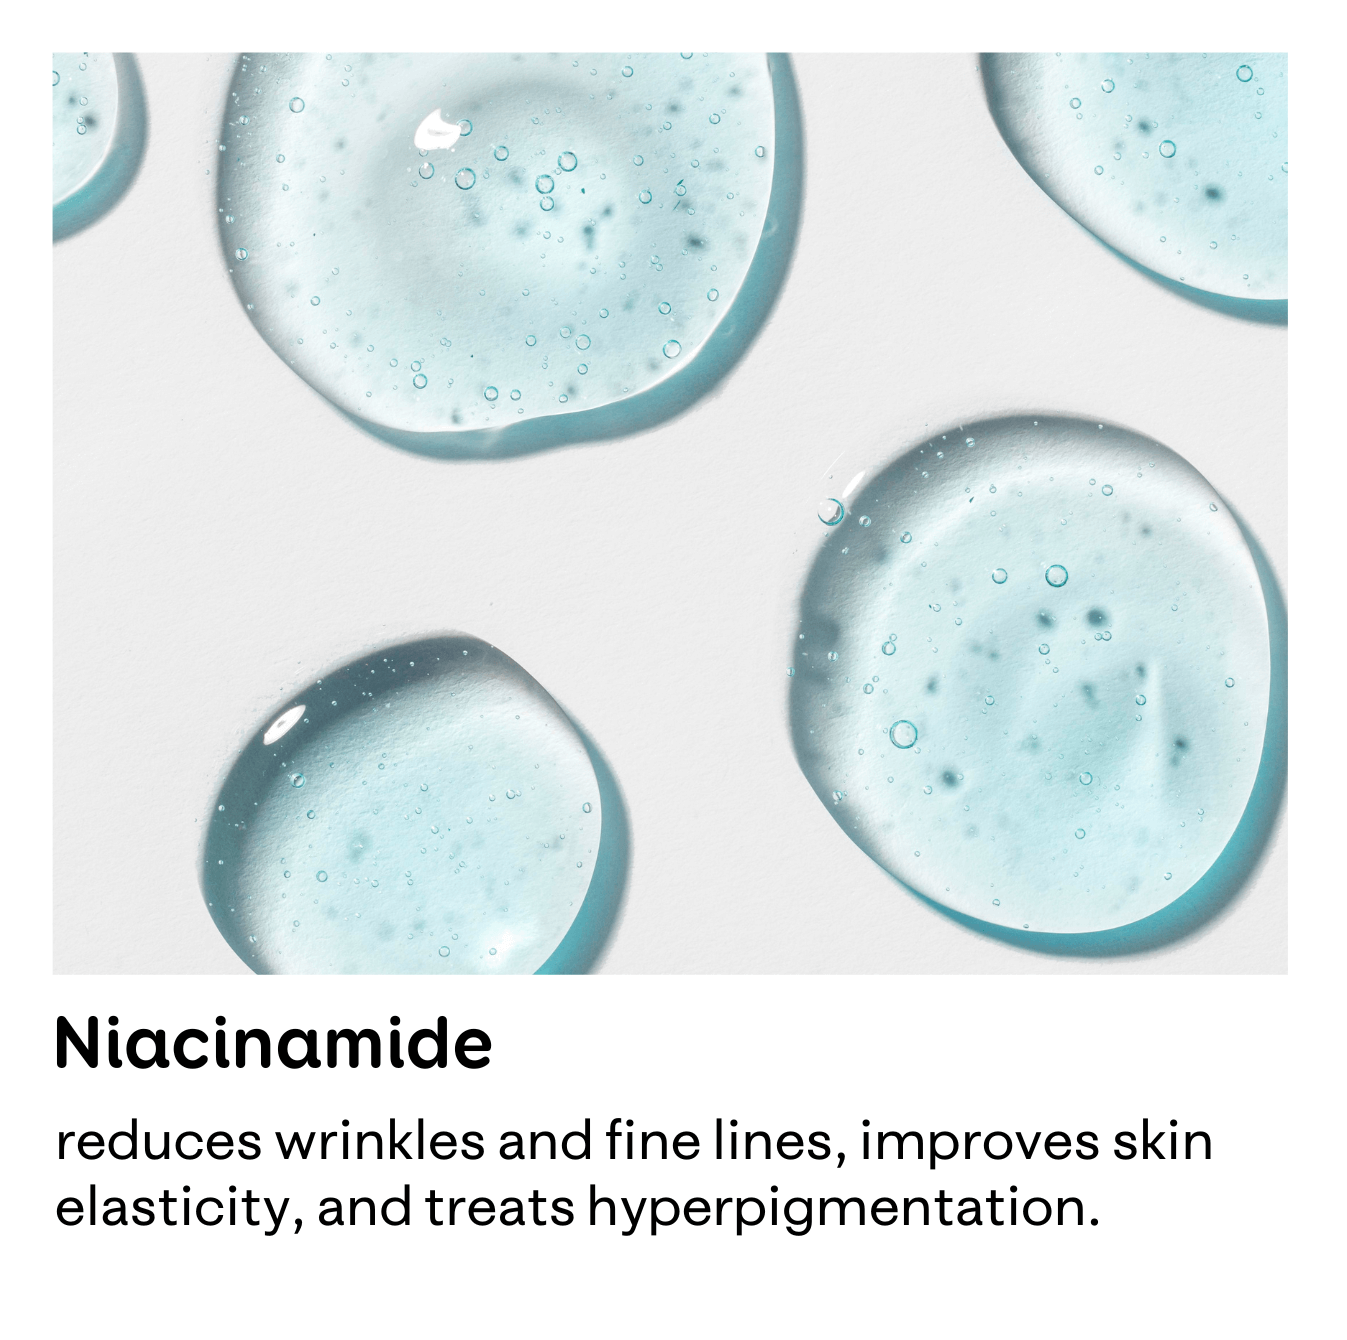 Niacinamide in the best men's hydrating face mist for oily skin, ensuring skin tightening for men.